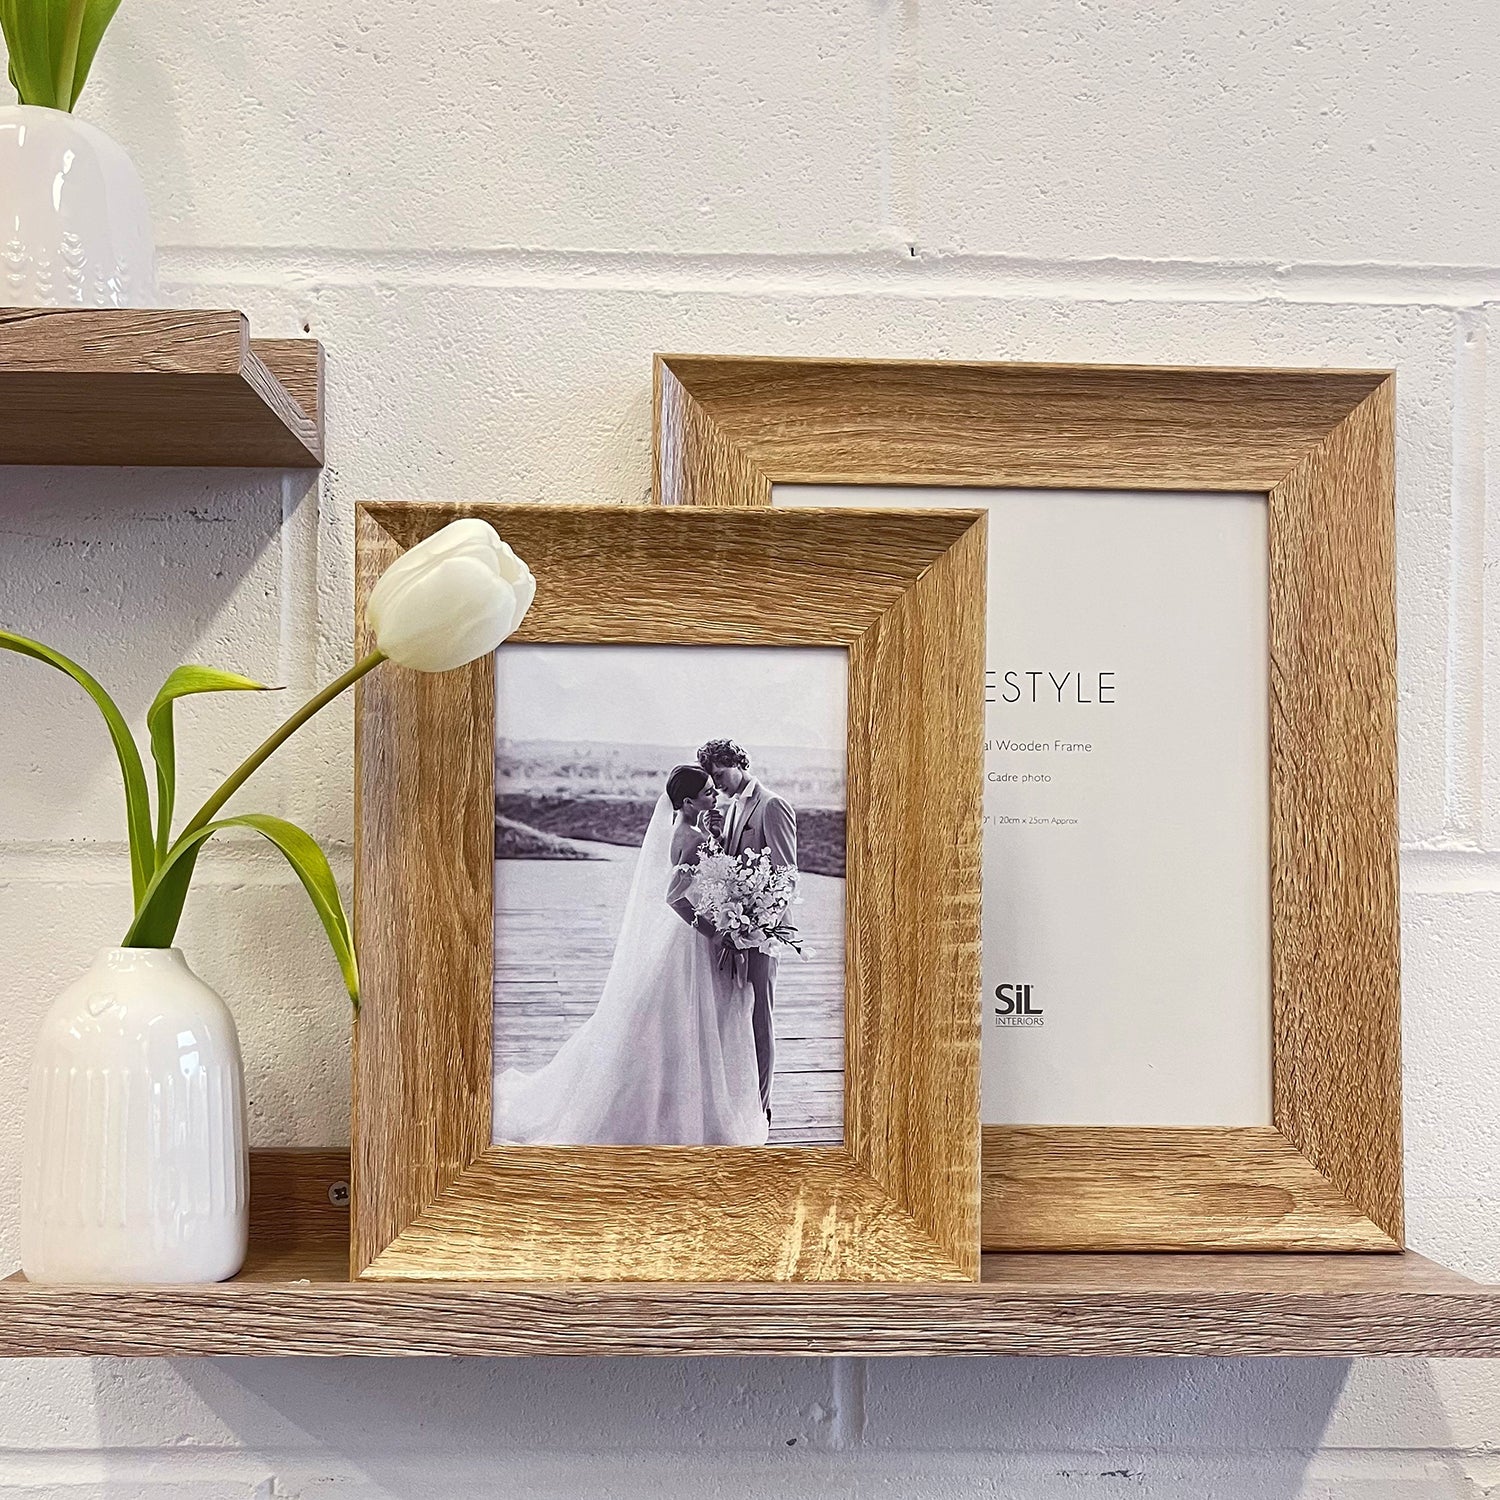 Wood Frame on shelf with a wedding photo of a couple